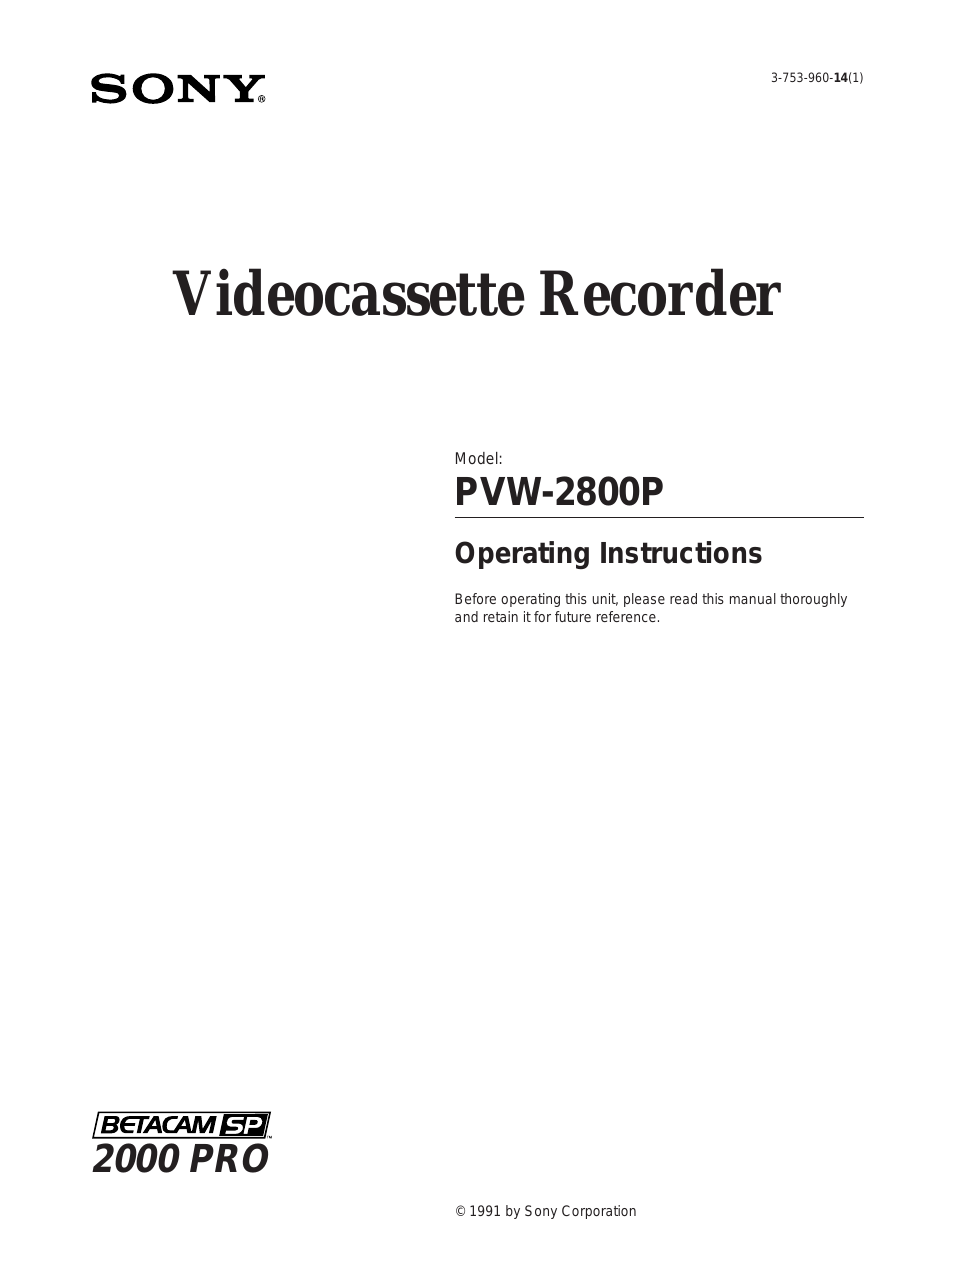 PVW-2800P